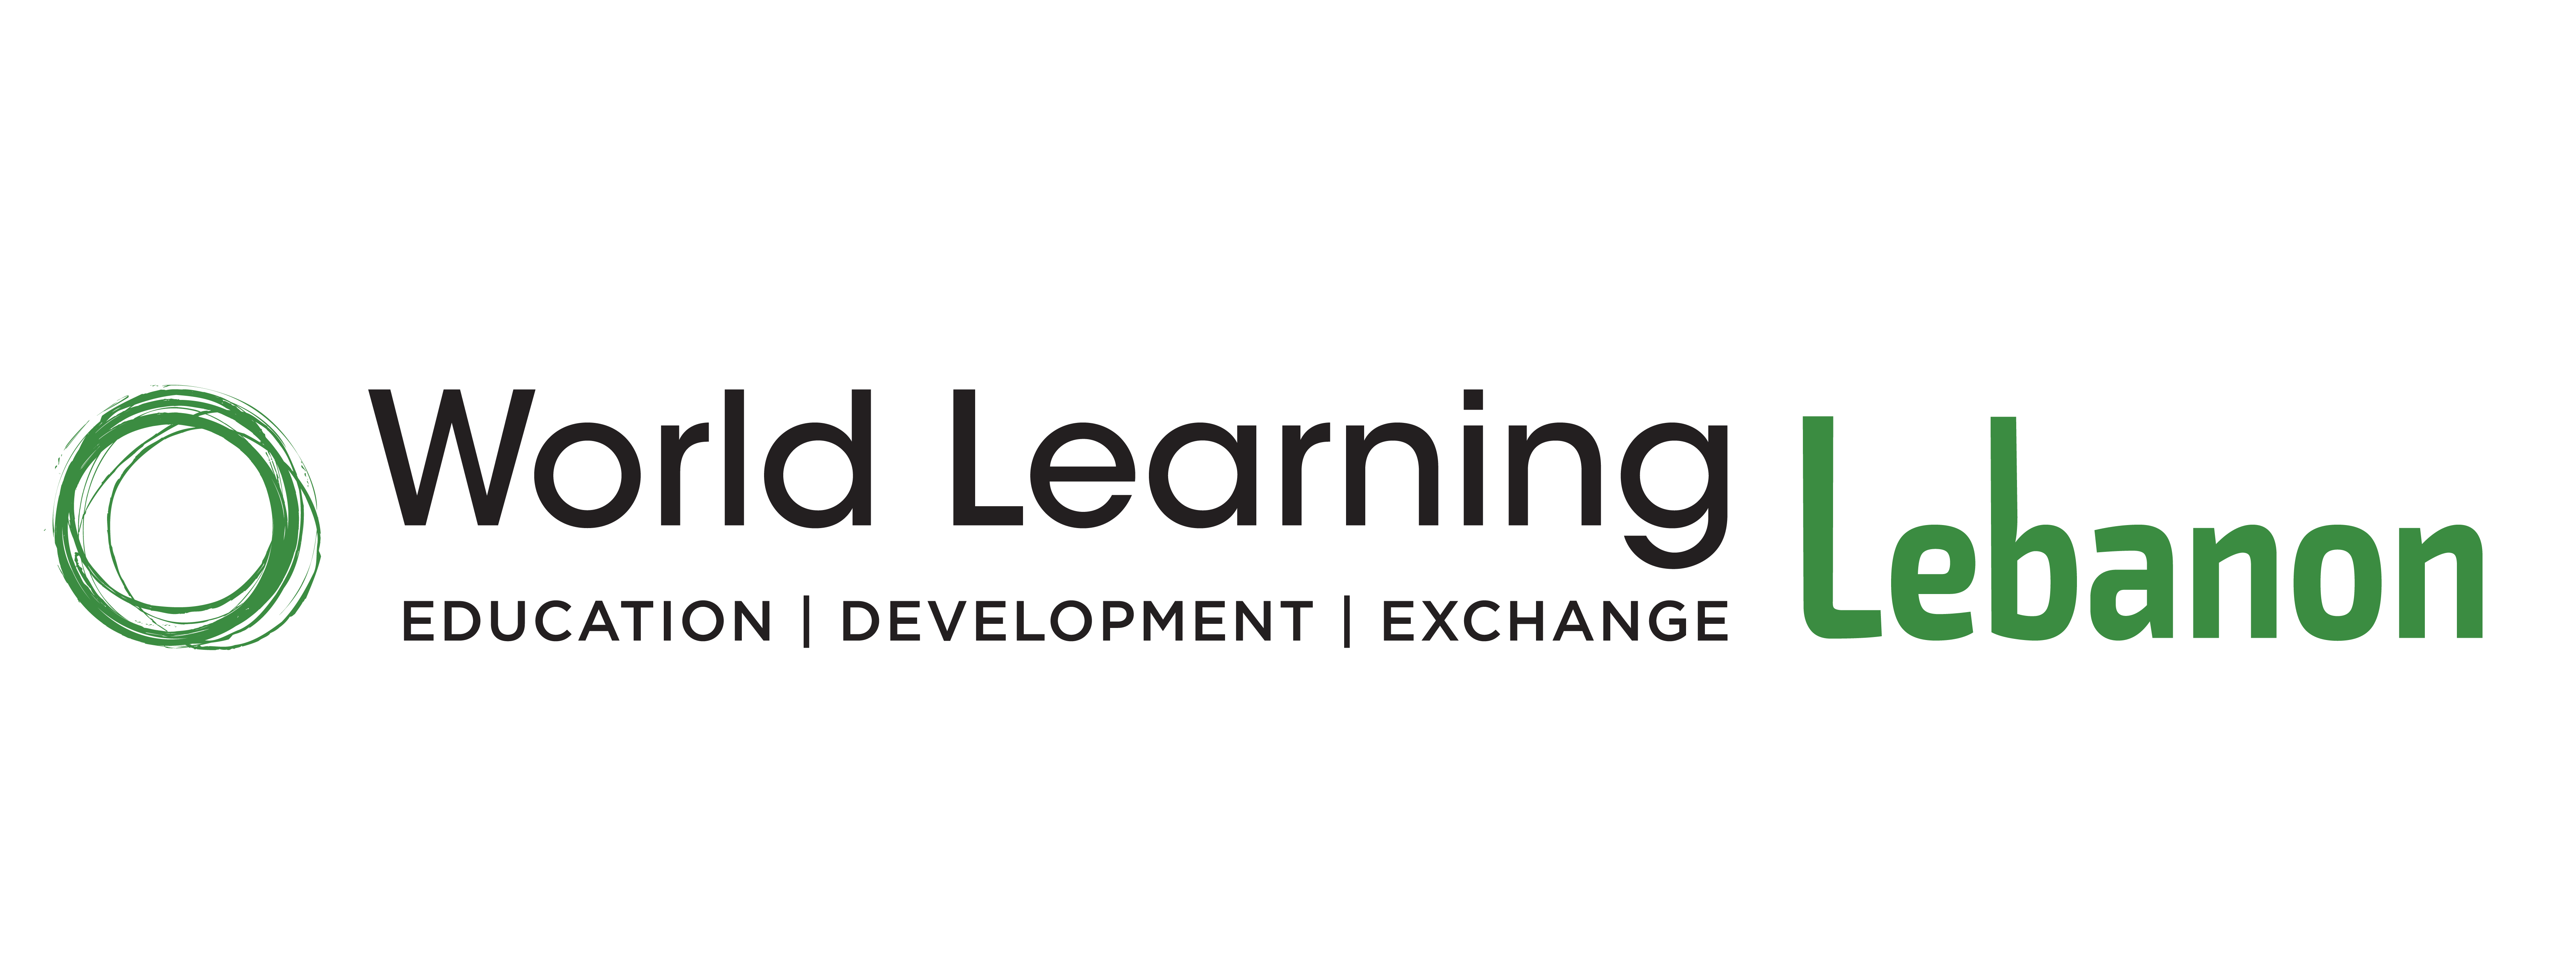 World Learning Lebanon